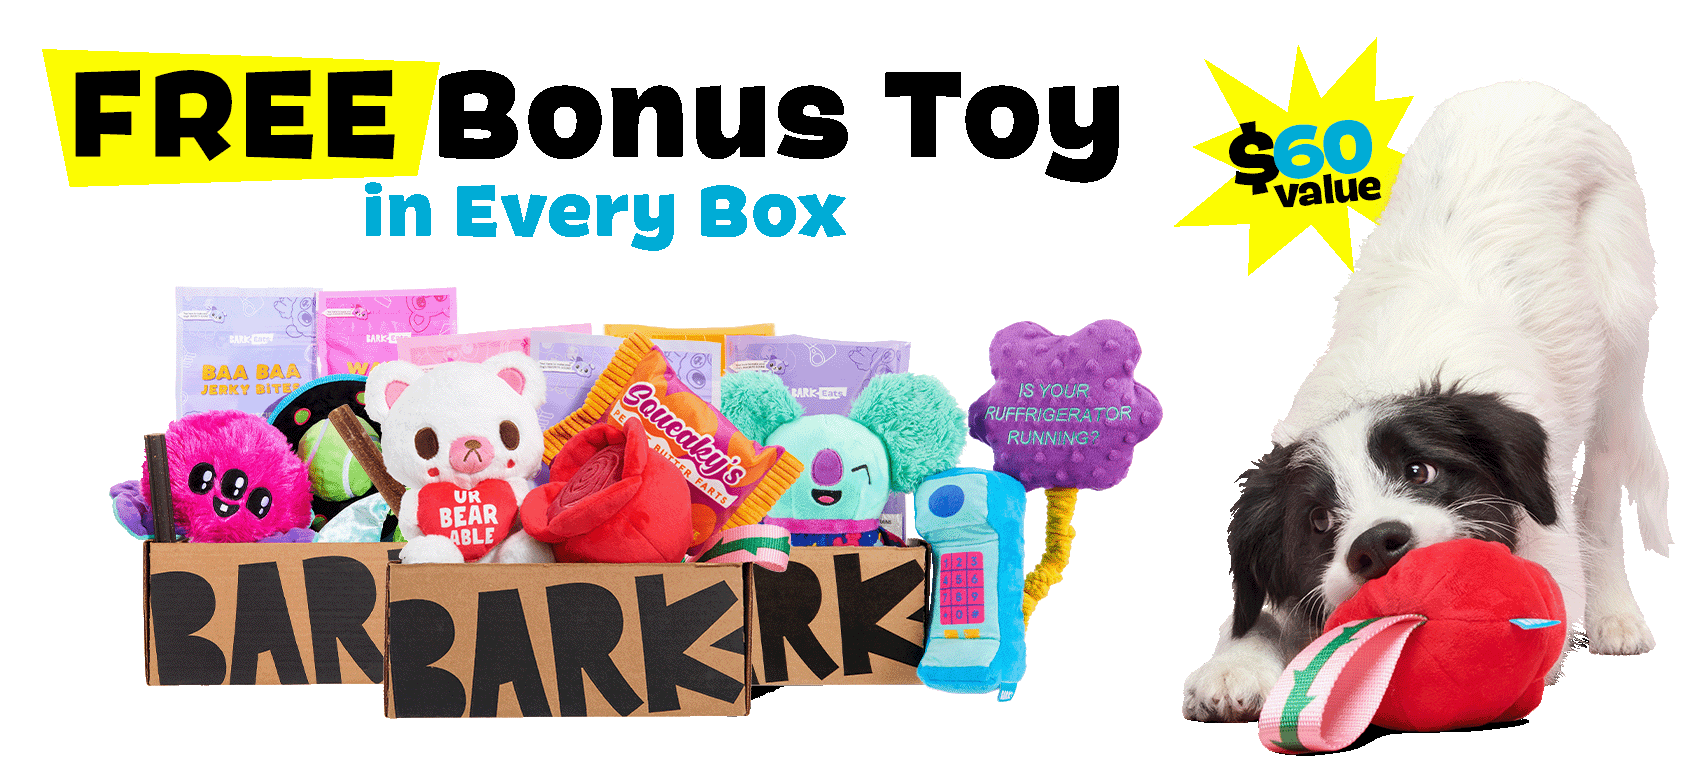 FREE Bonus Toy in Every Box - $60 value